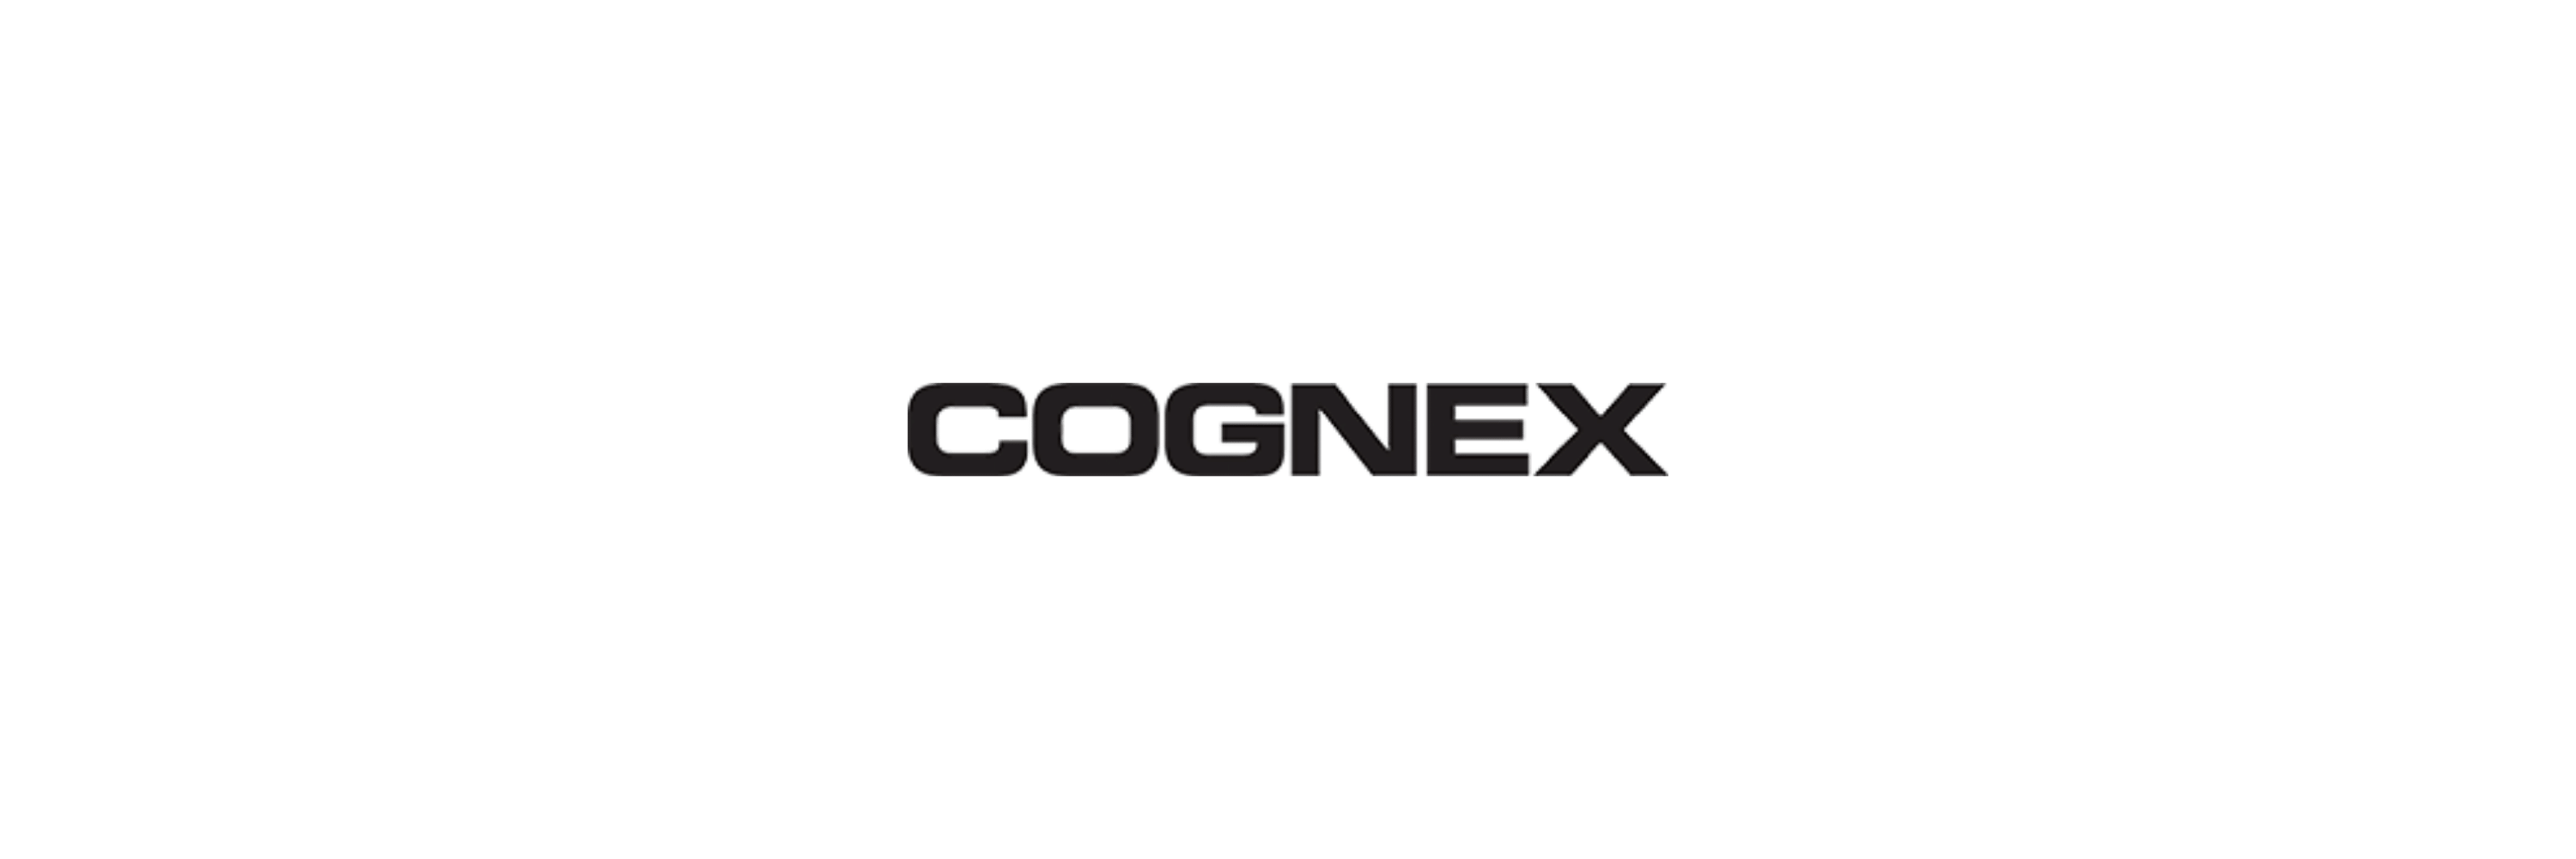 Cognex - Klenk Maschinenhandel